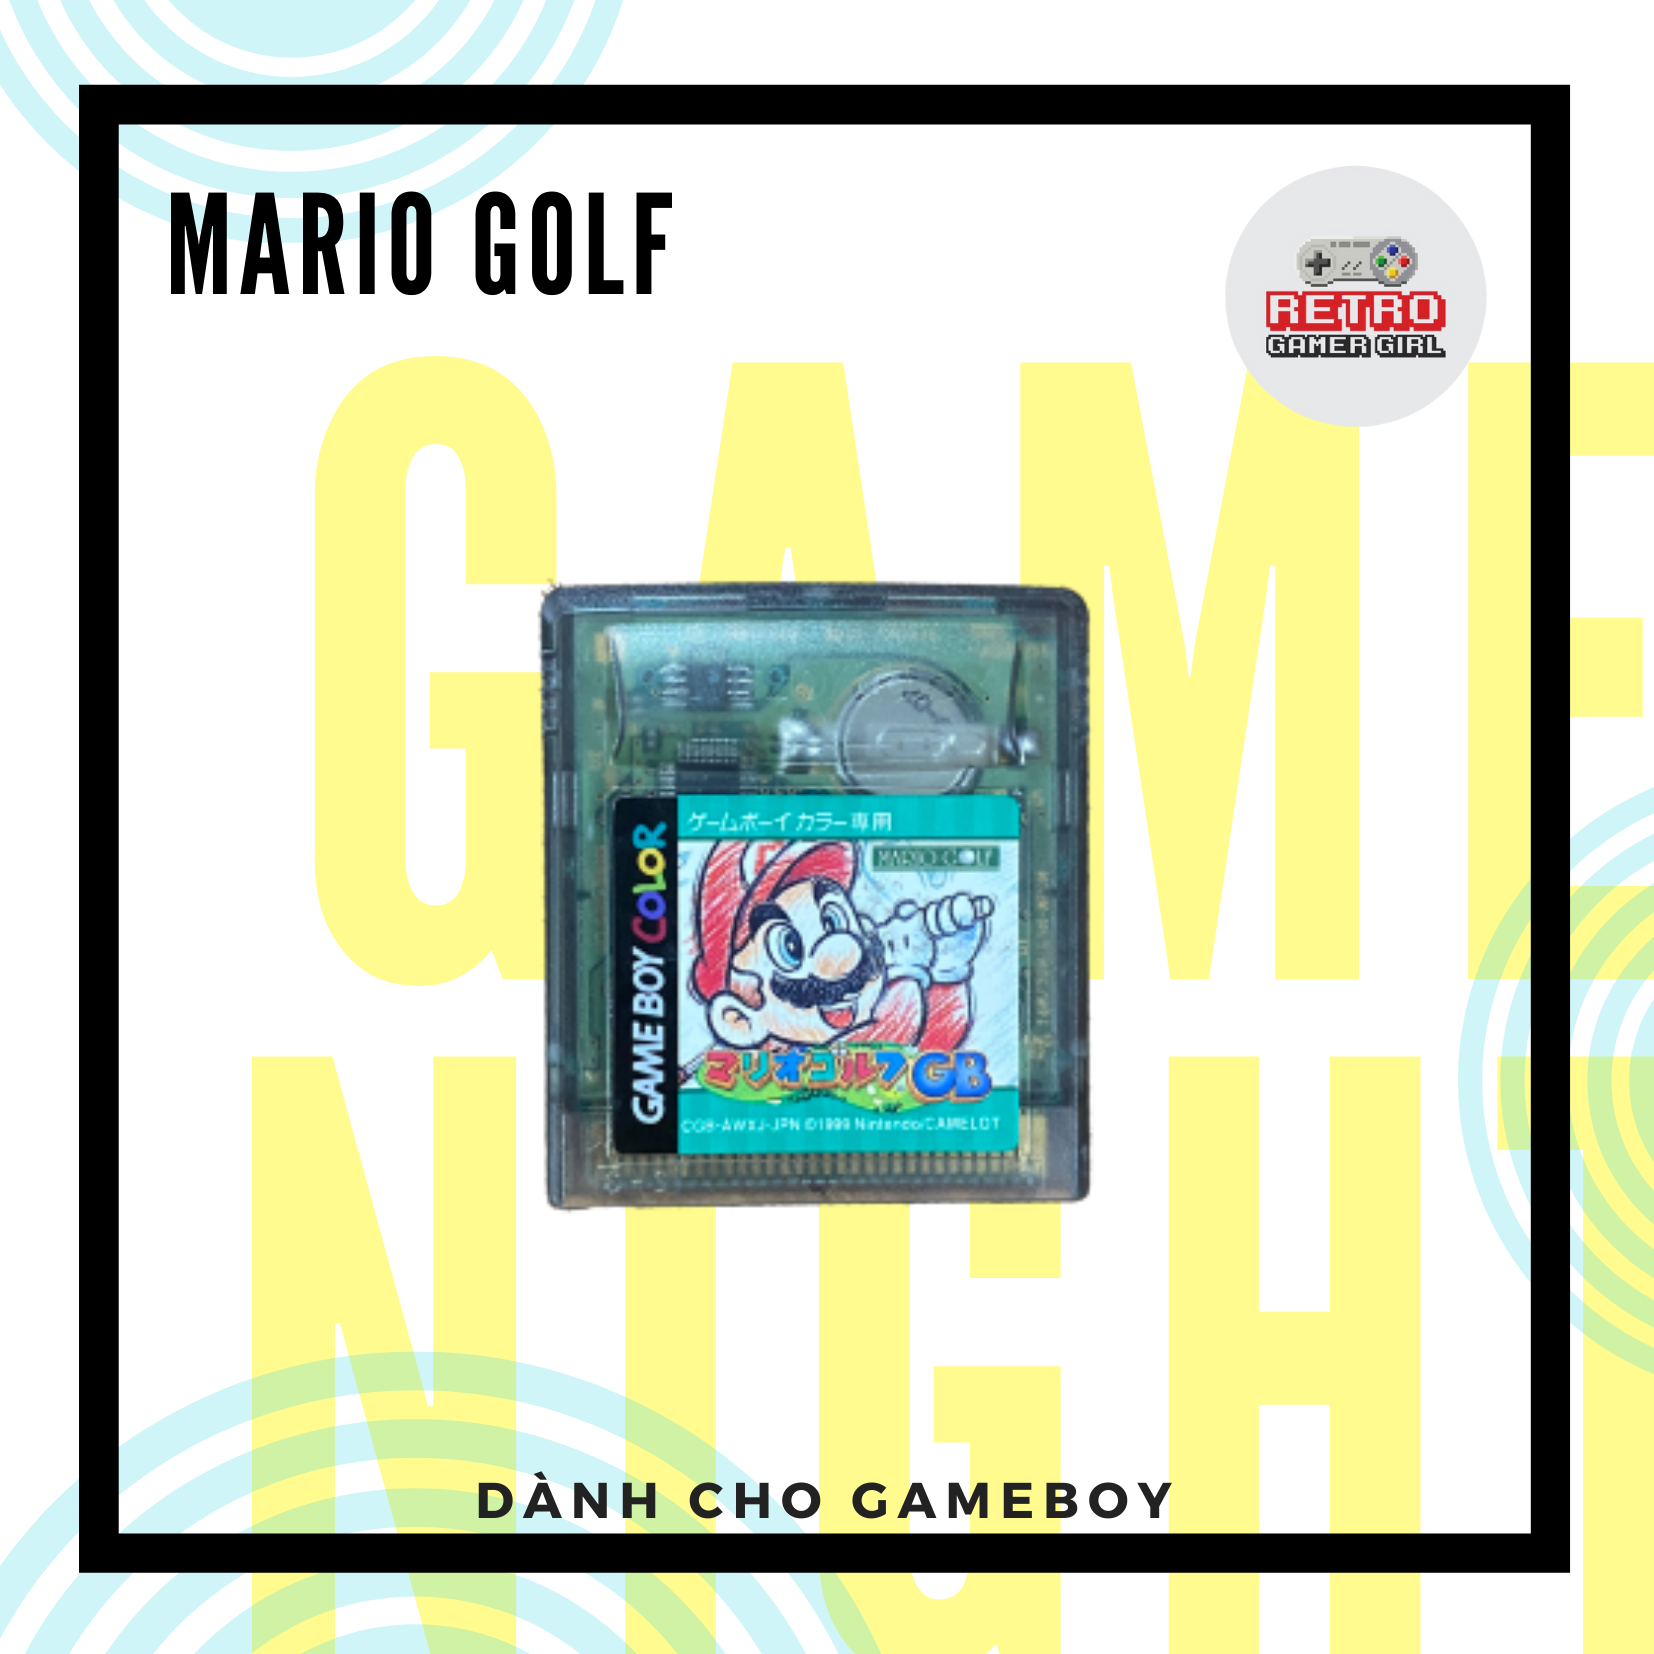 Băng game Mario Golf Gameboy hệ Nhật